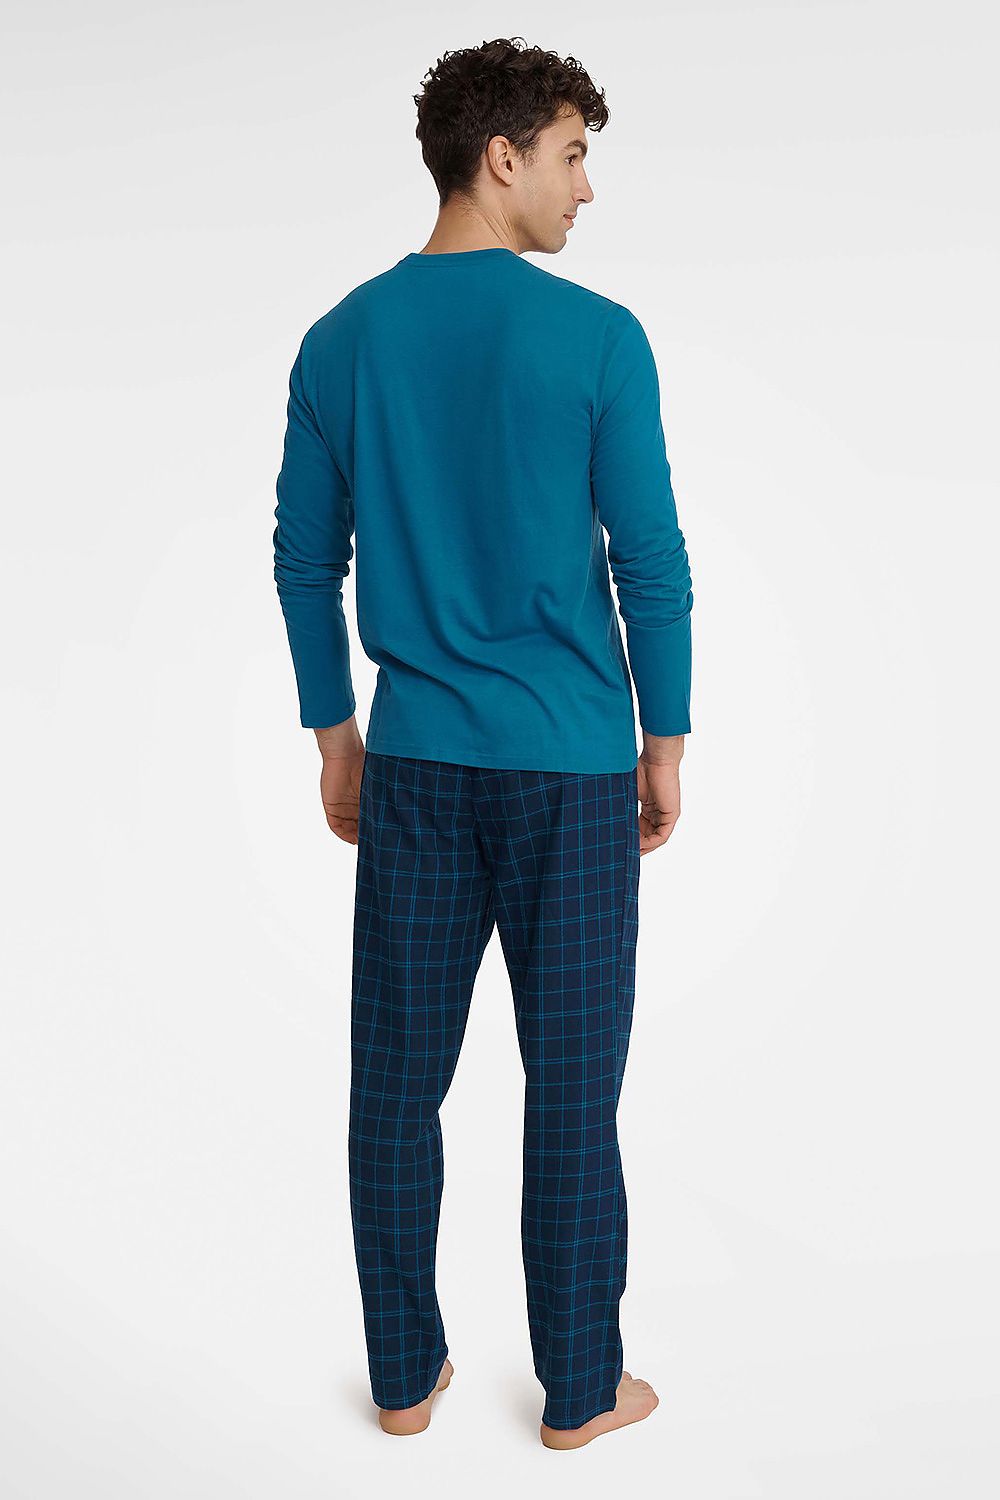 Pyjama model 183841 Henderson